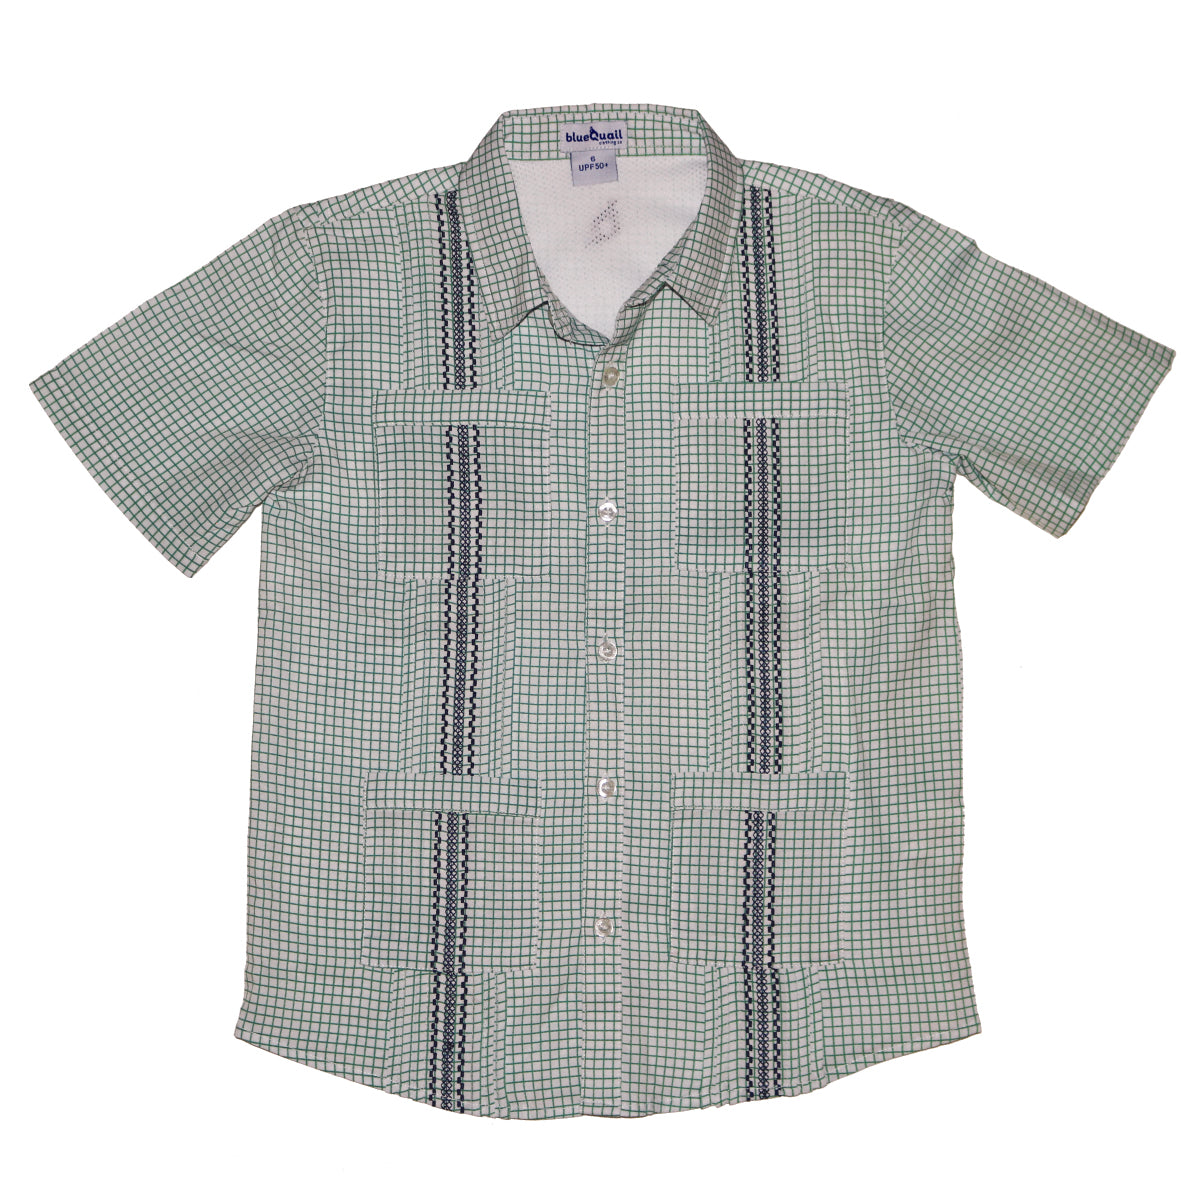 Guayabera - Sage Green & Navy Short Sleeve Shirt